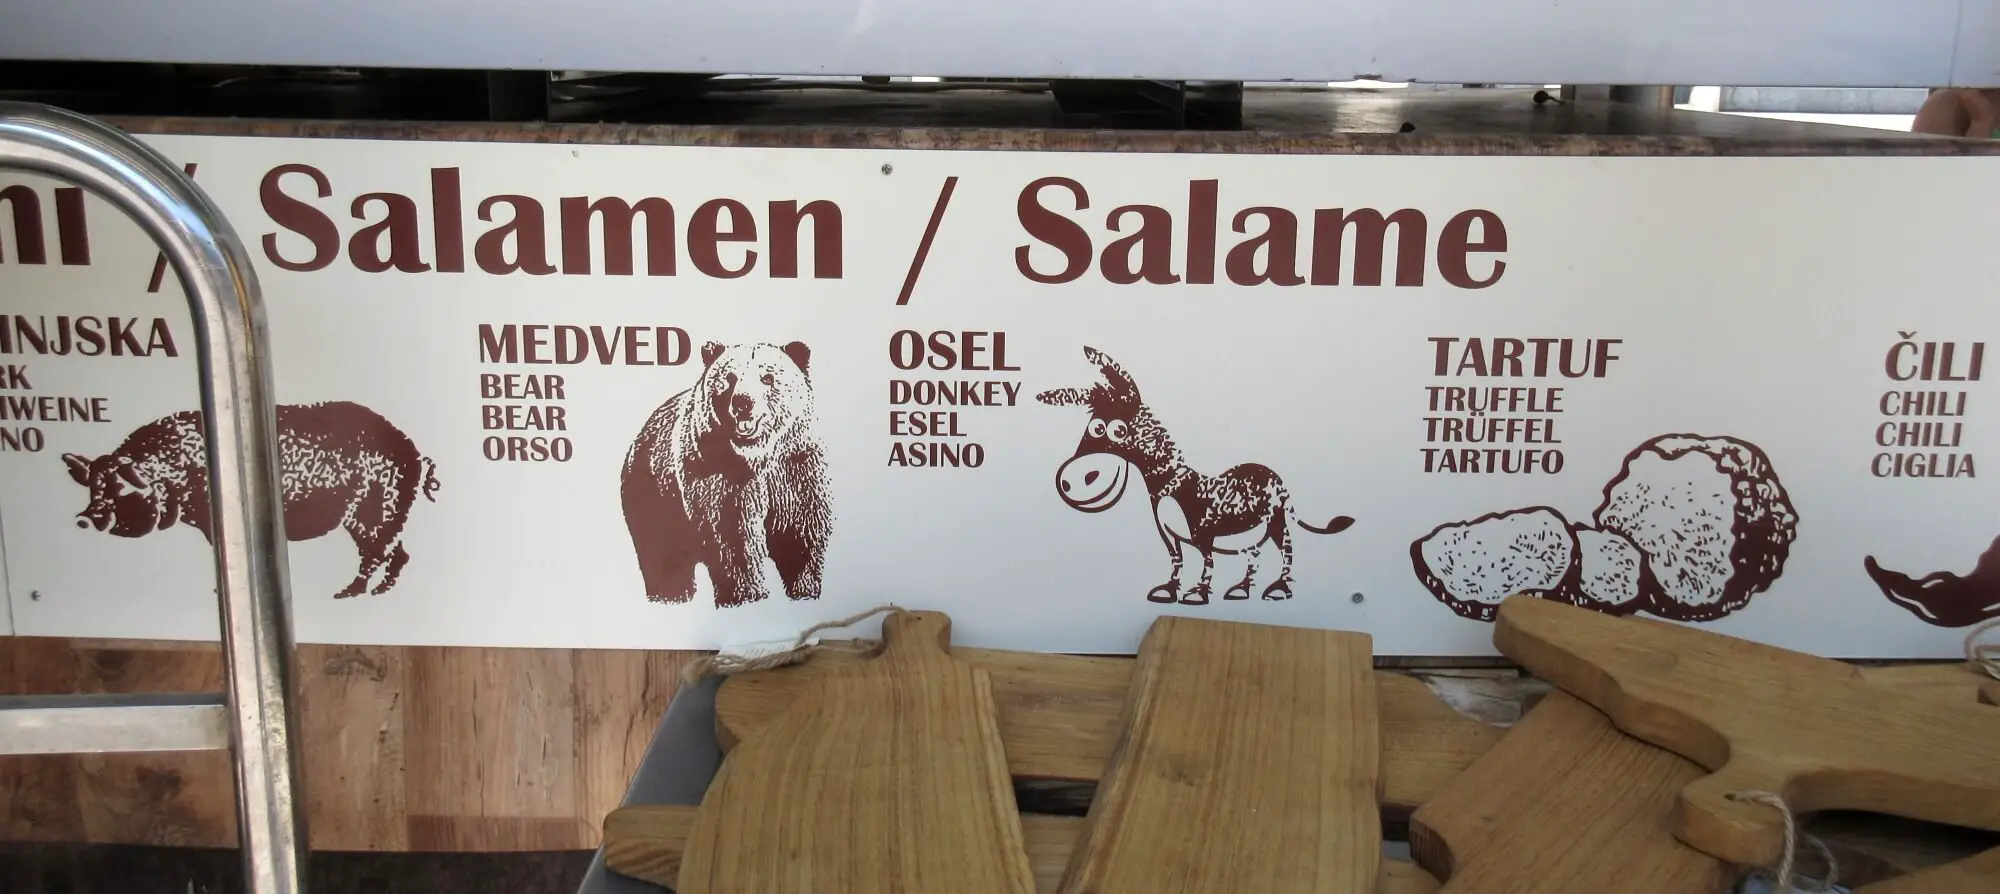 jl flanner august 2019 ljubljana market salami bear donkey.jpg